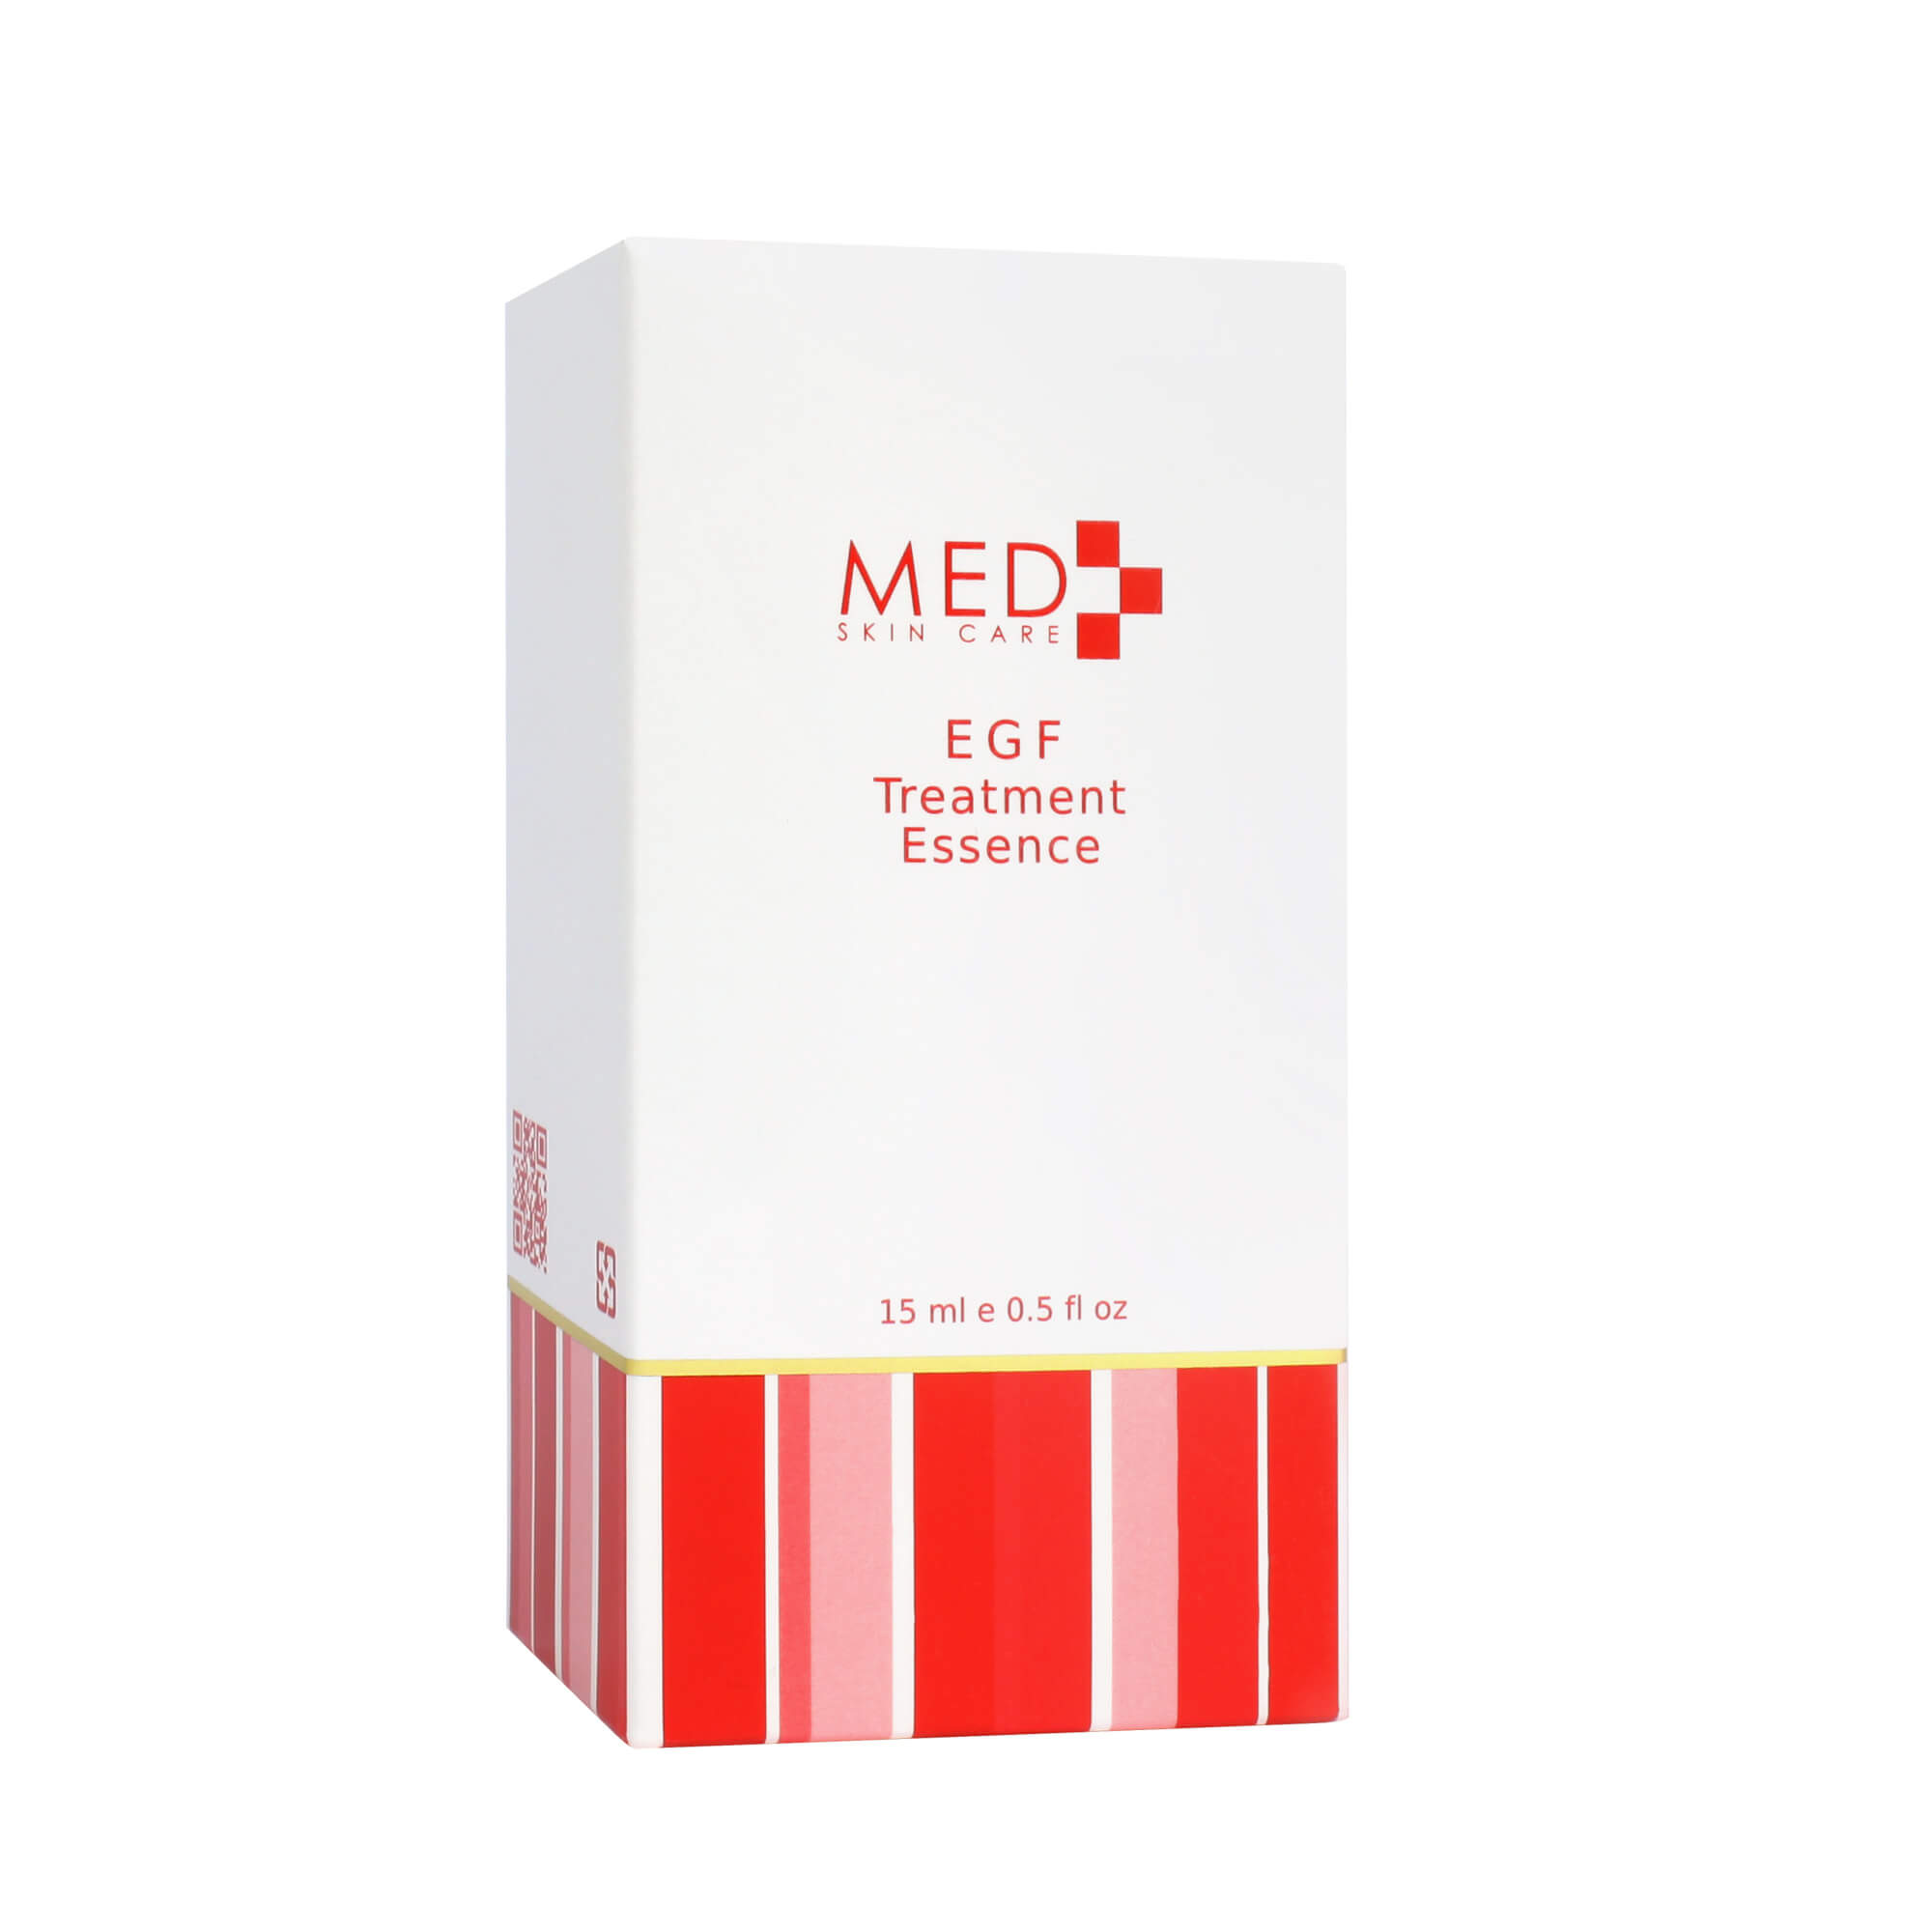 MED Skin Care EGF Treatment Essence